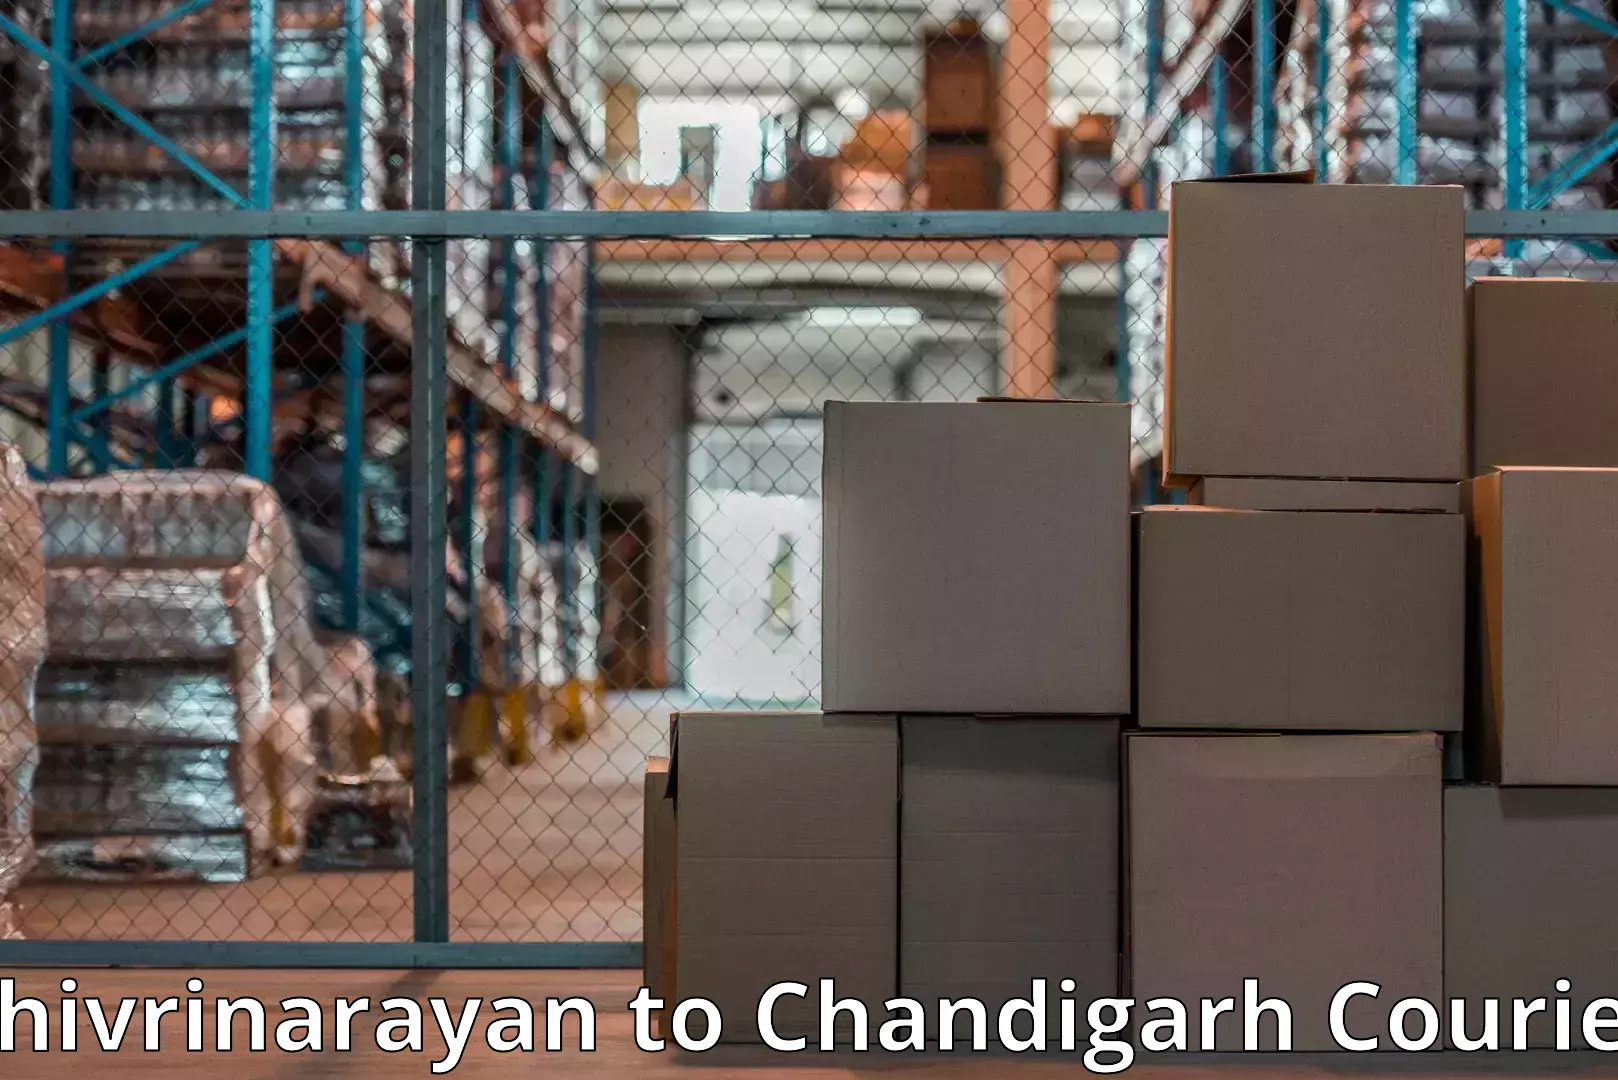 Furniture relocation experts Shivrinarayan to Chandigarh